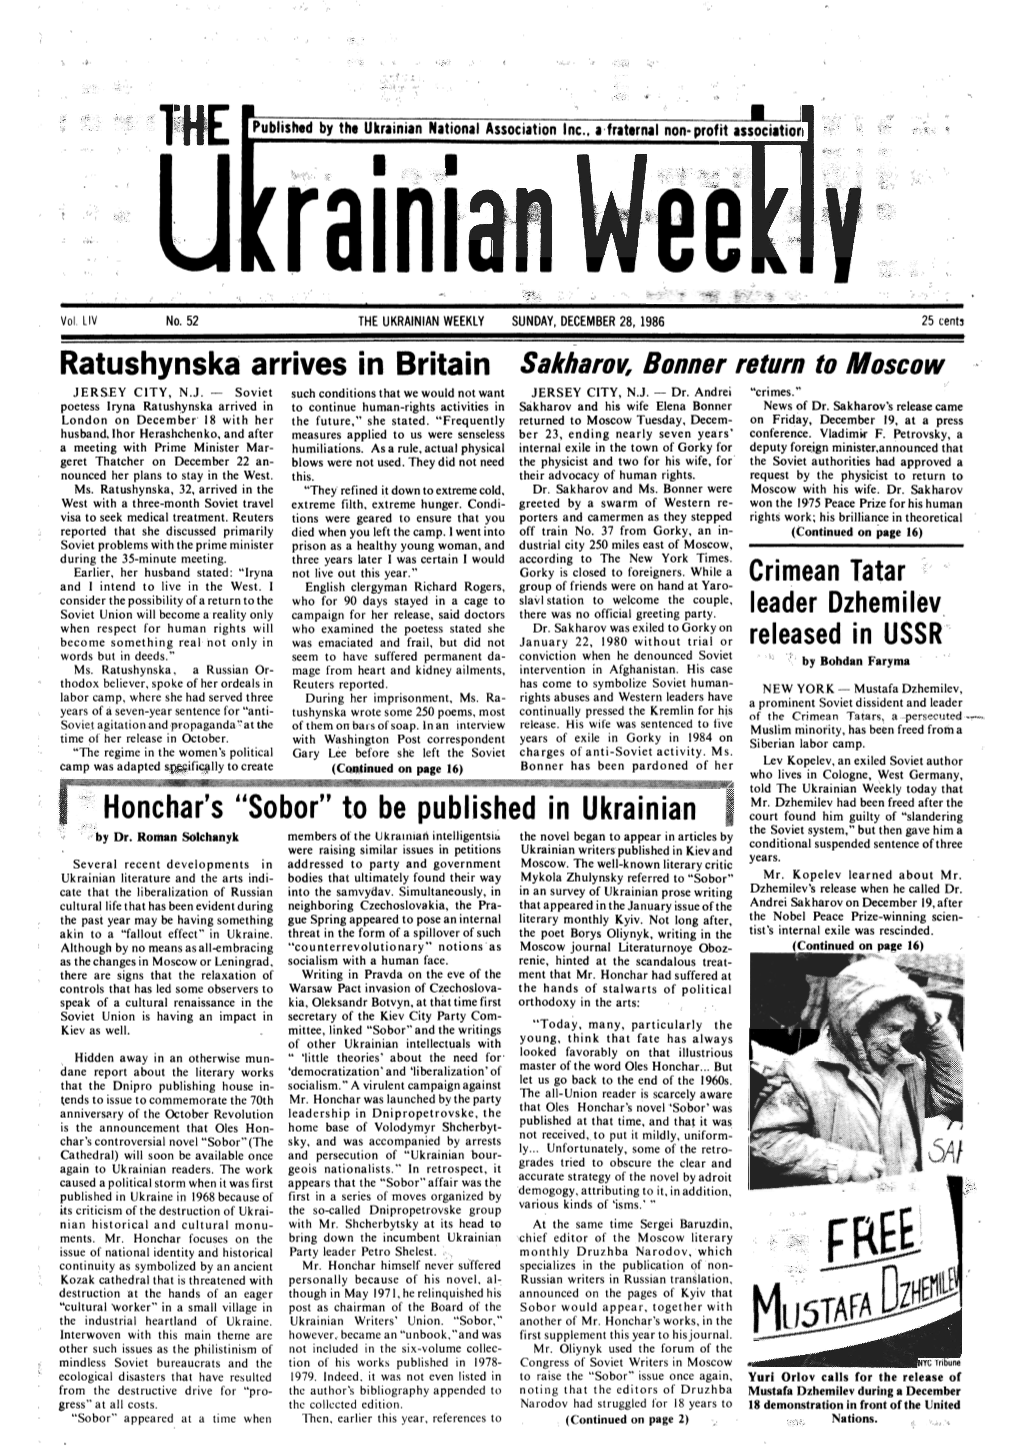 The Ukrainian Weekly 1986, No.52